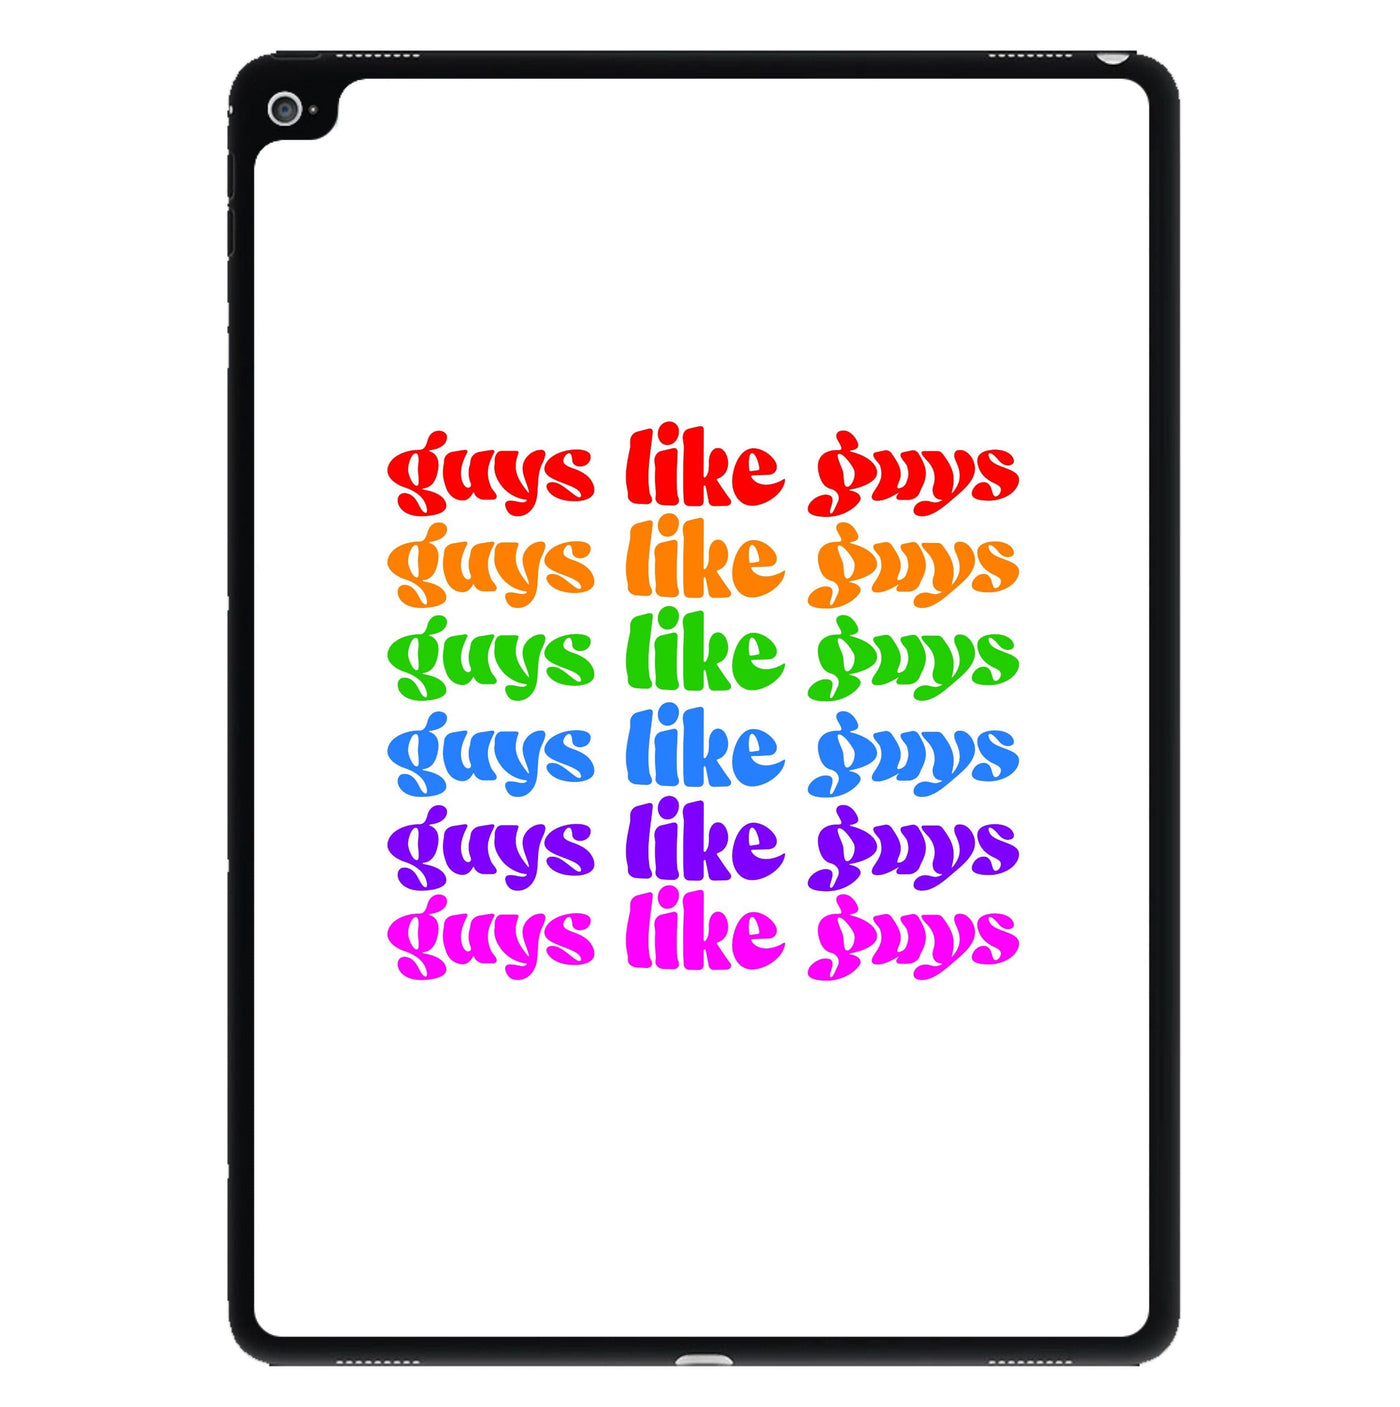 Guys like guys - Pride iPad Case